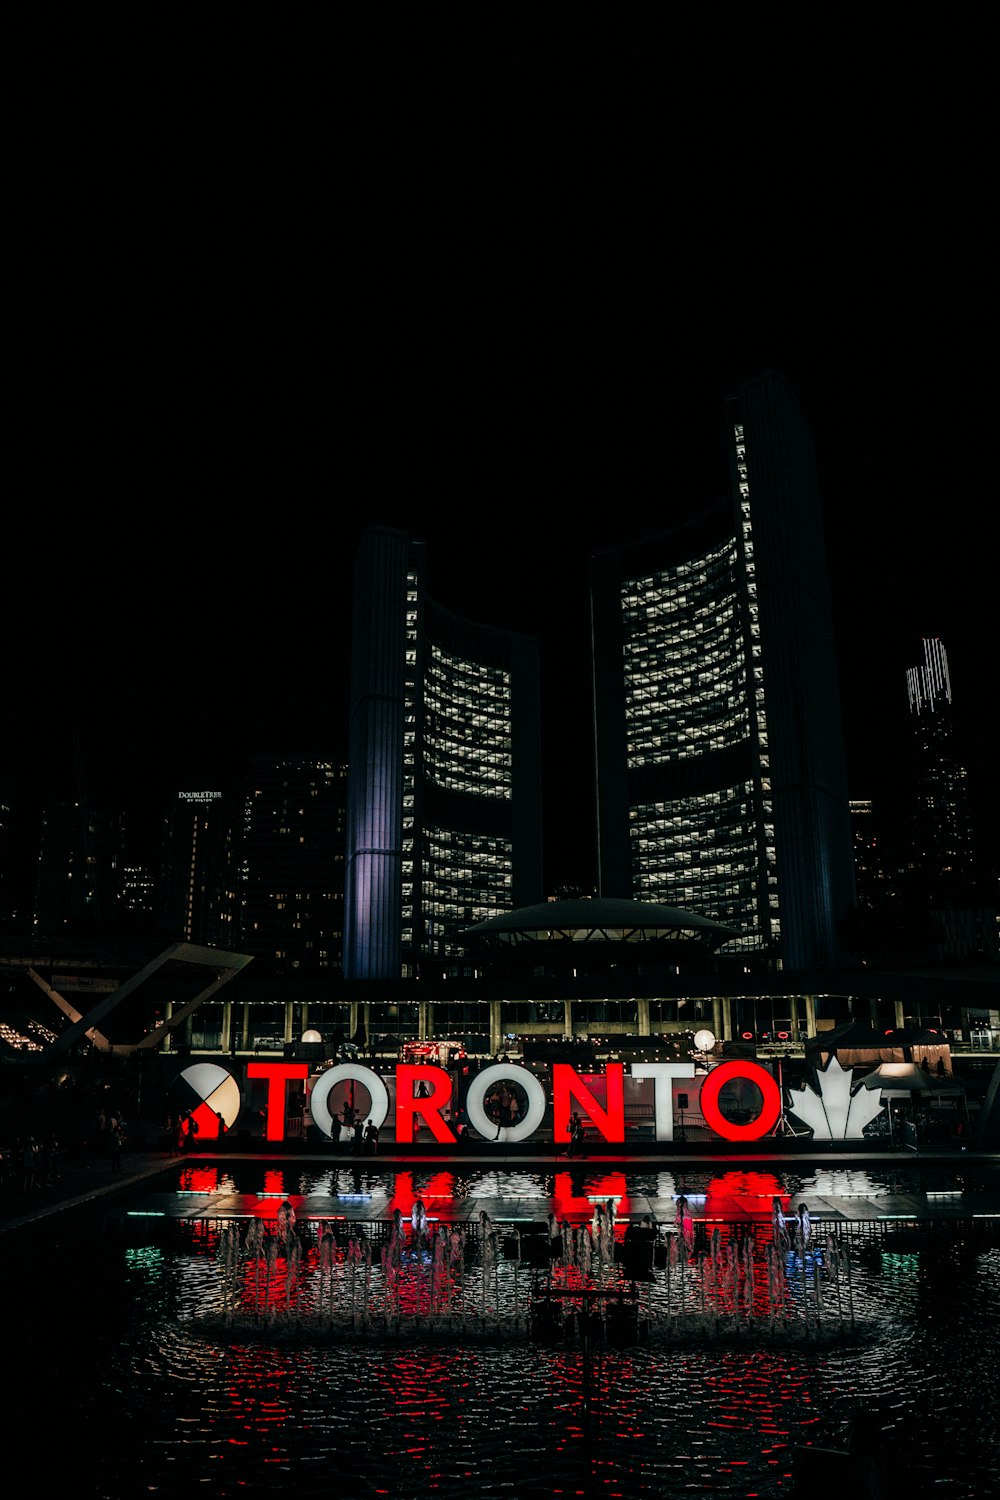 lighted Toronto sign at night